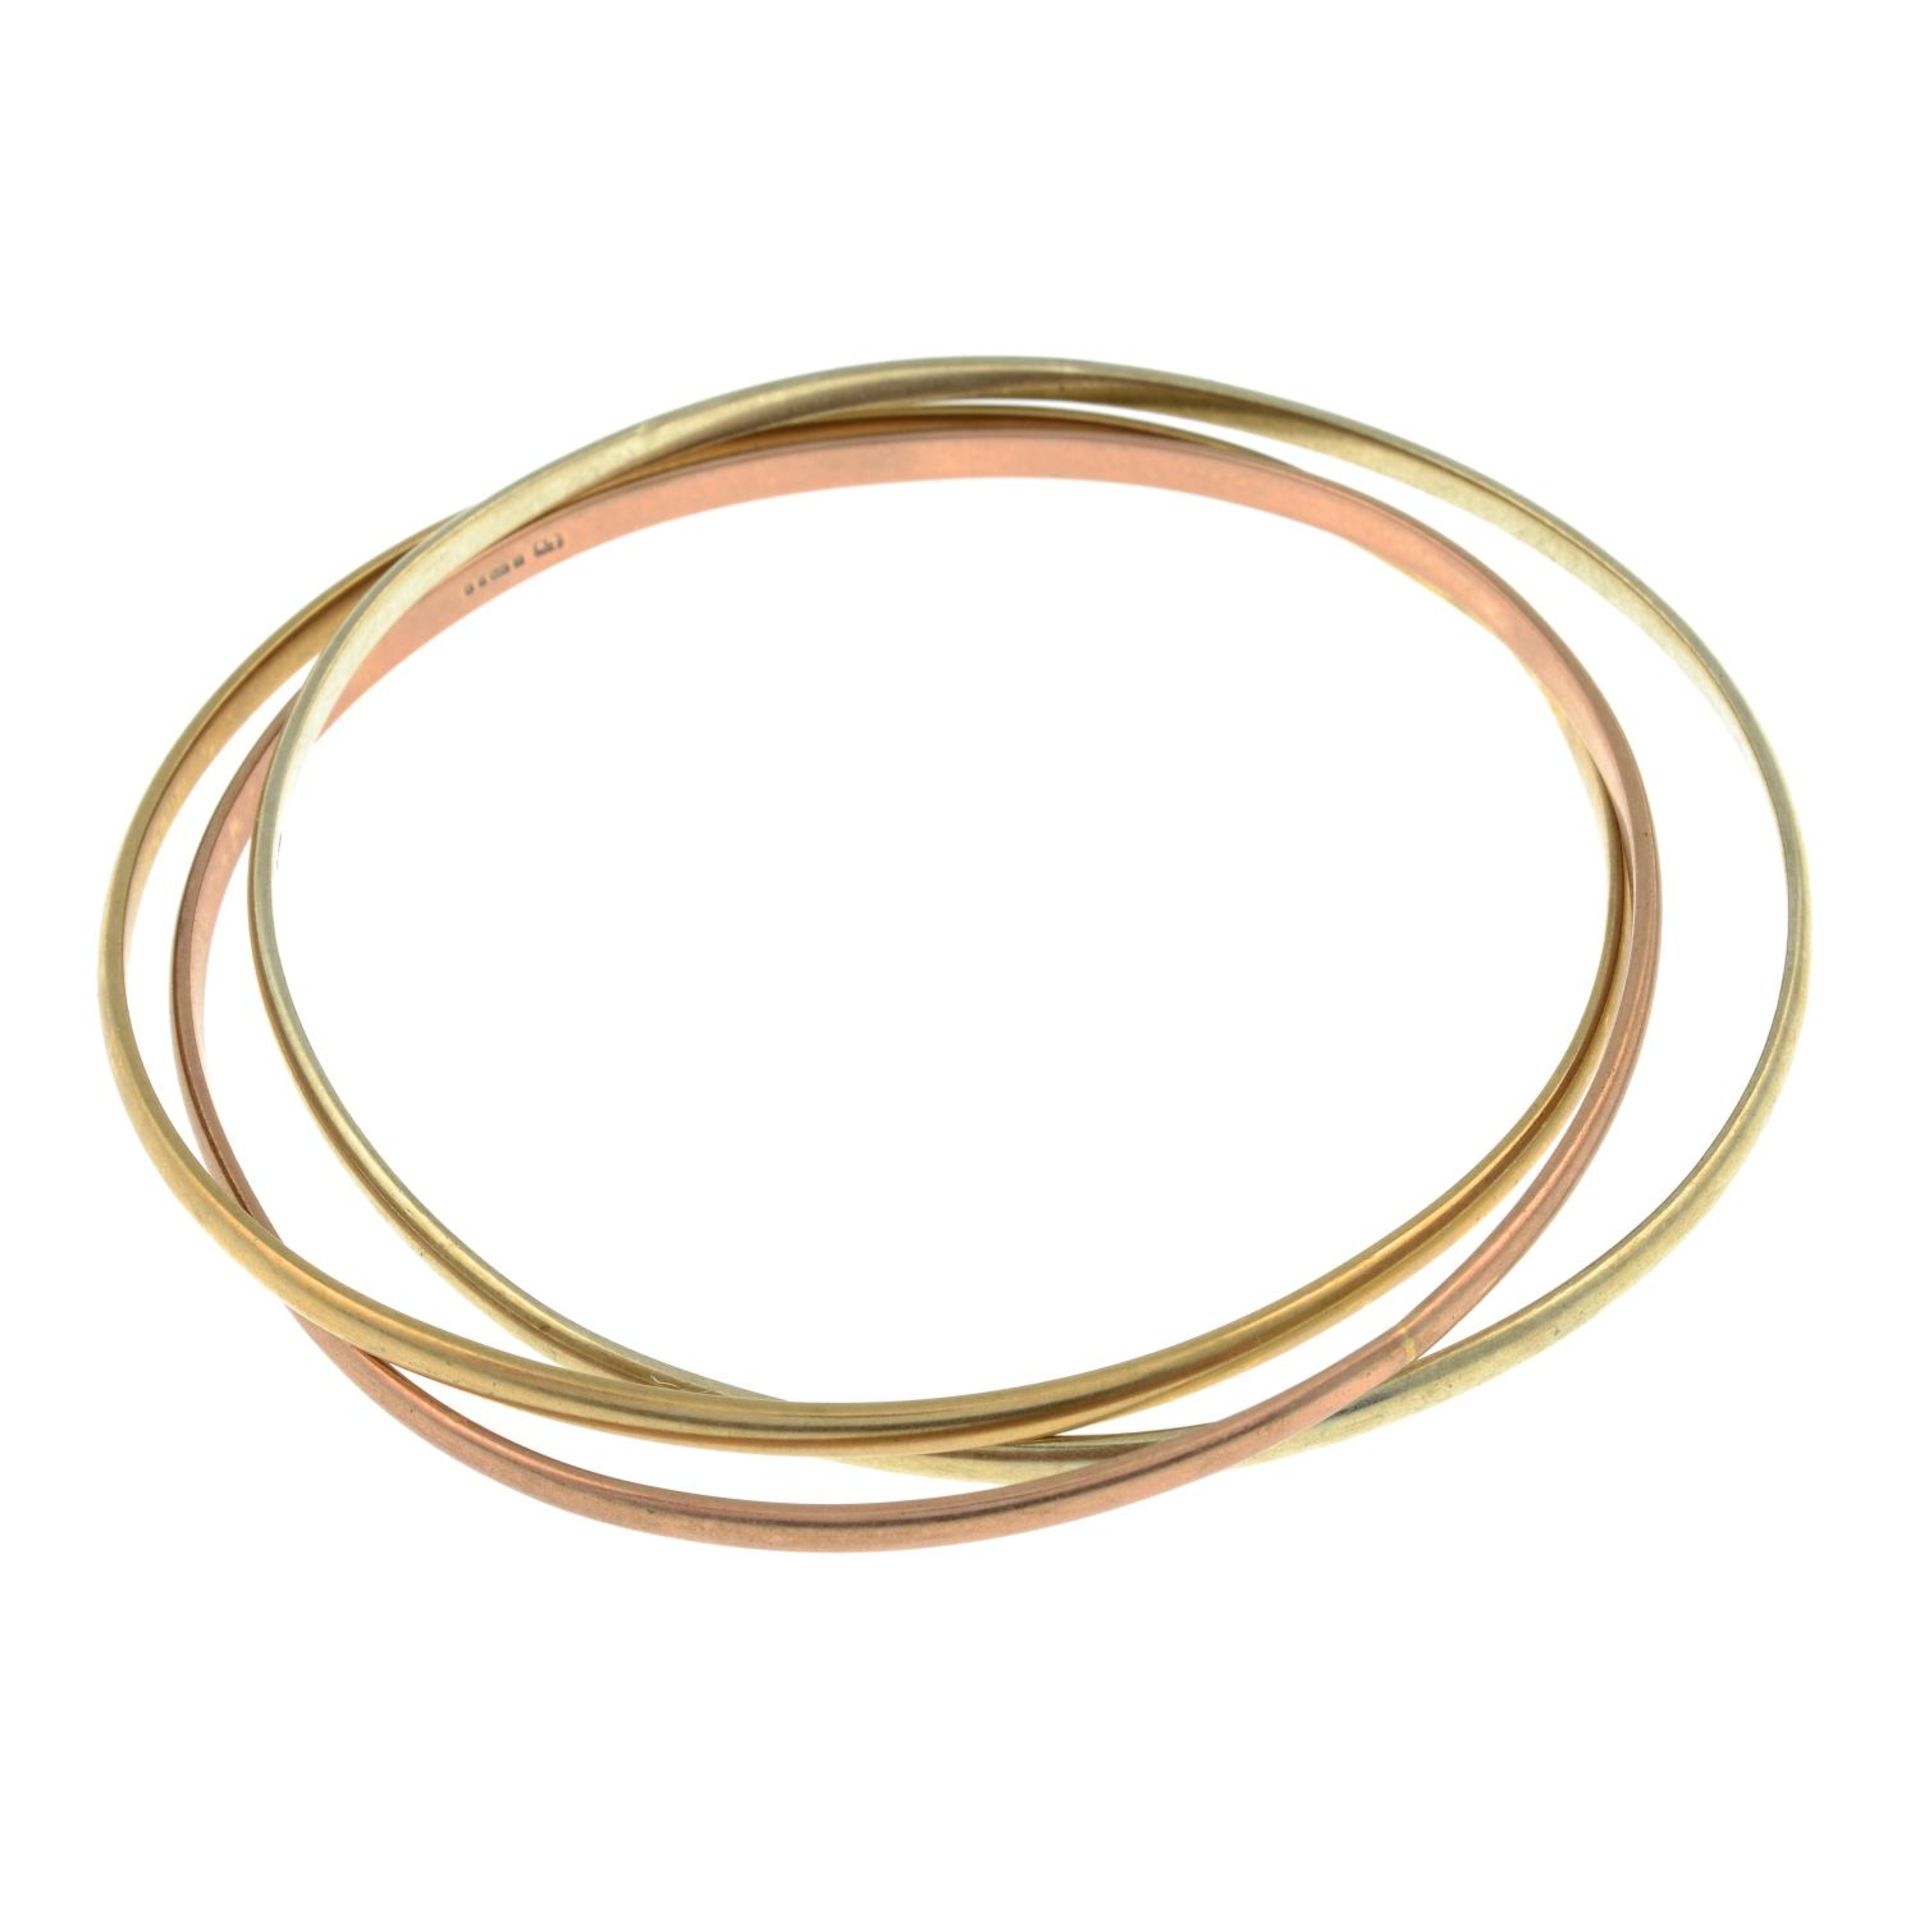 A 9ct gold tri-colour three-band bangle.Hallmarks for 9ct gold.